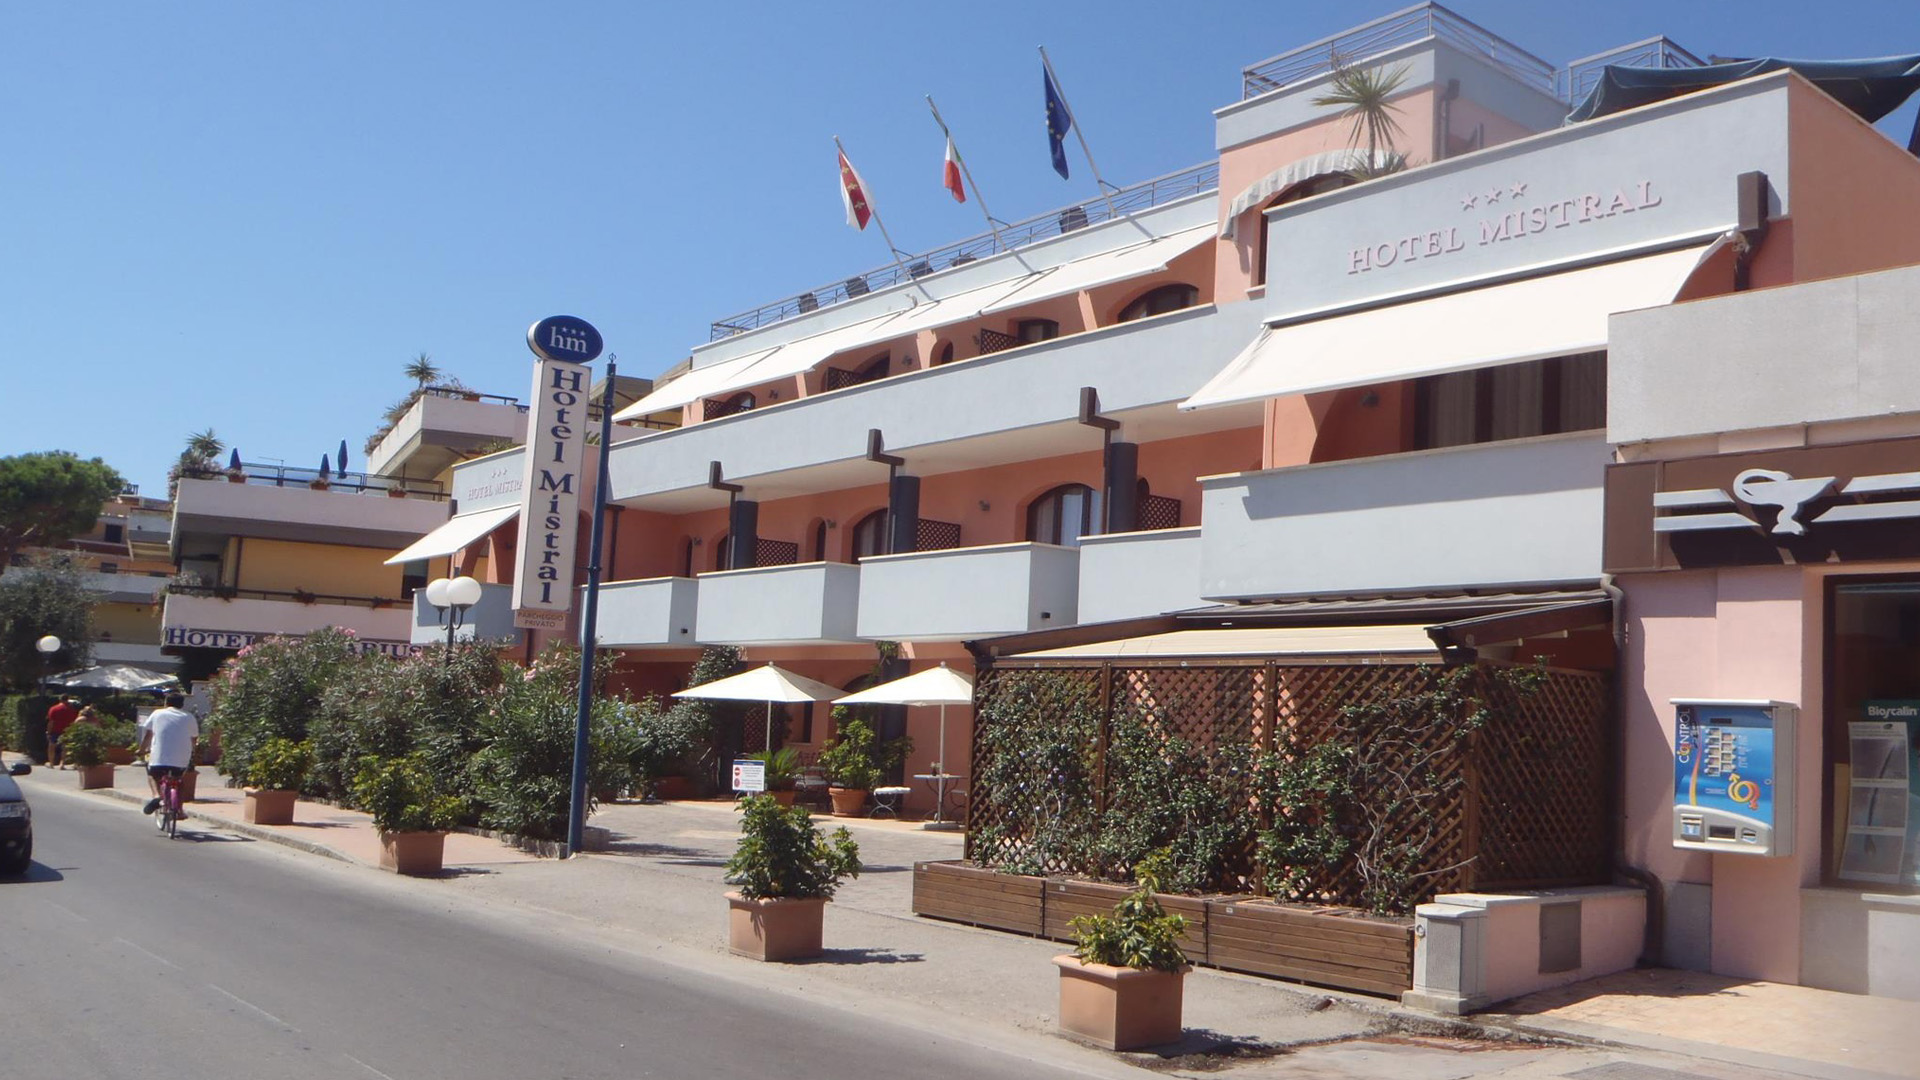 hotel mistral con BluNavy traghetti